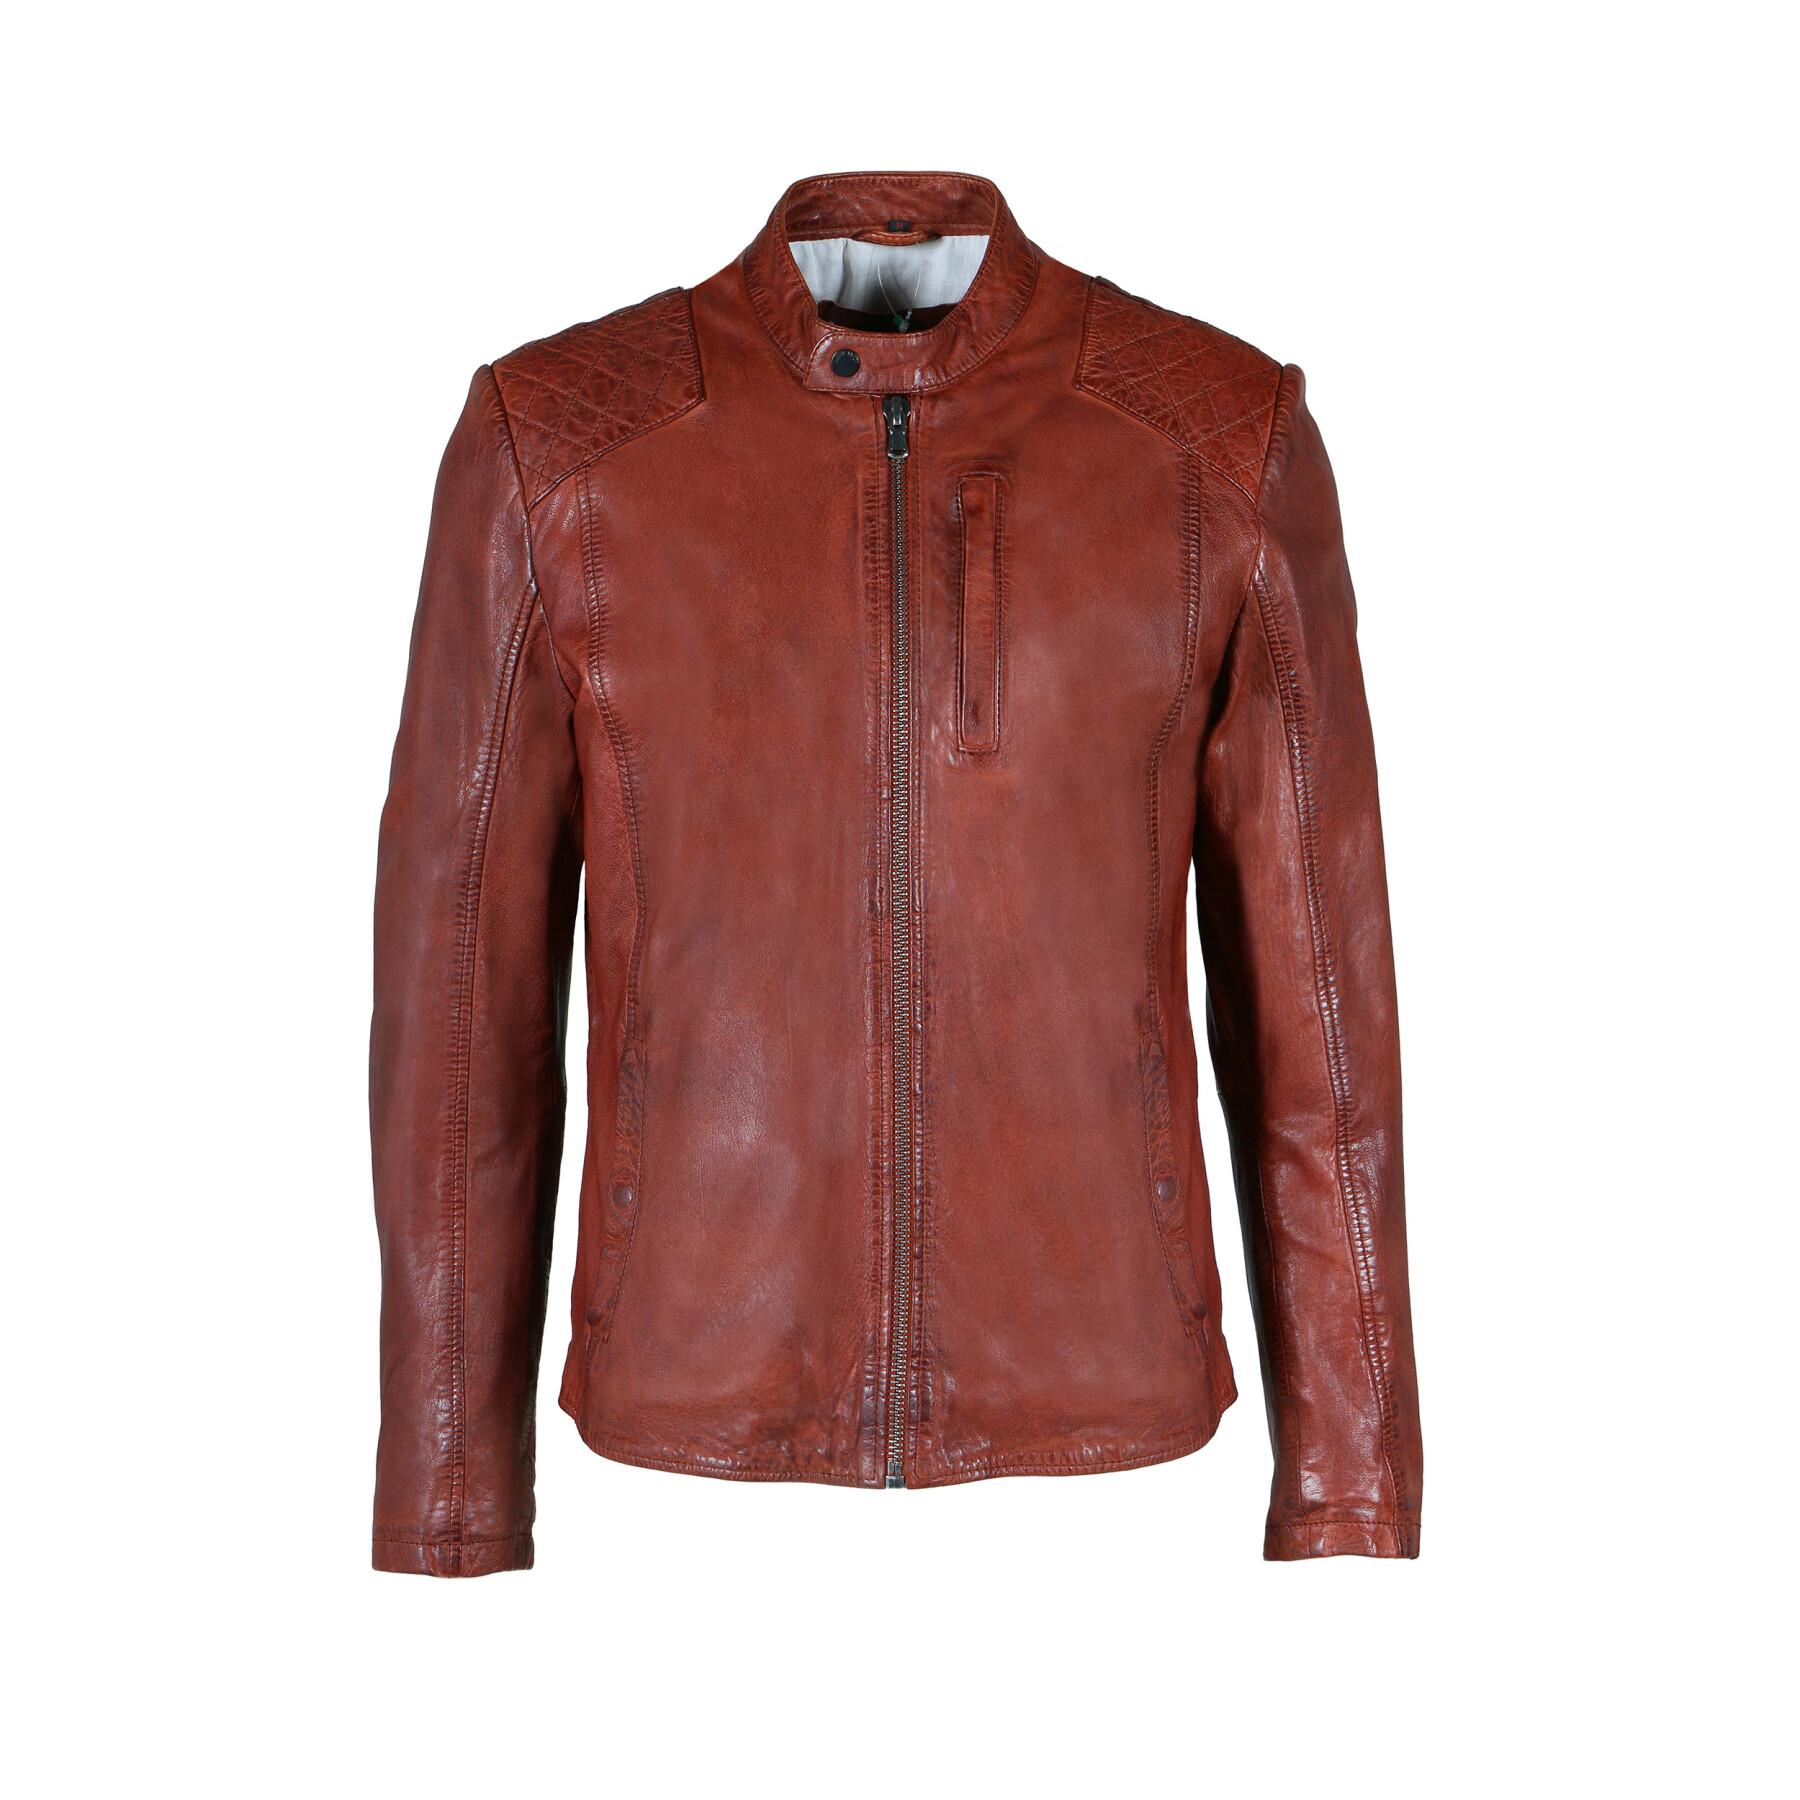 Freaky Leather Kiano-FN Nation jacket